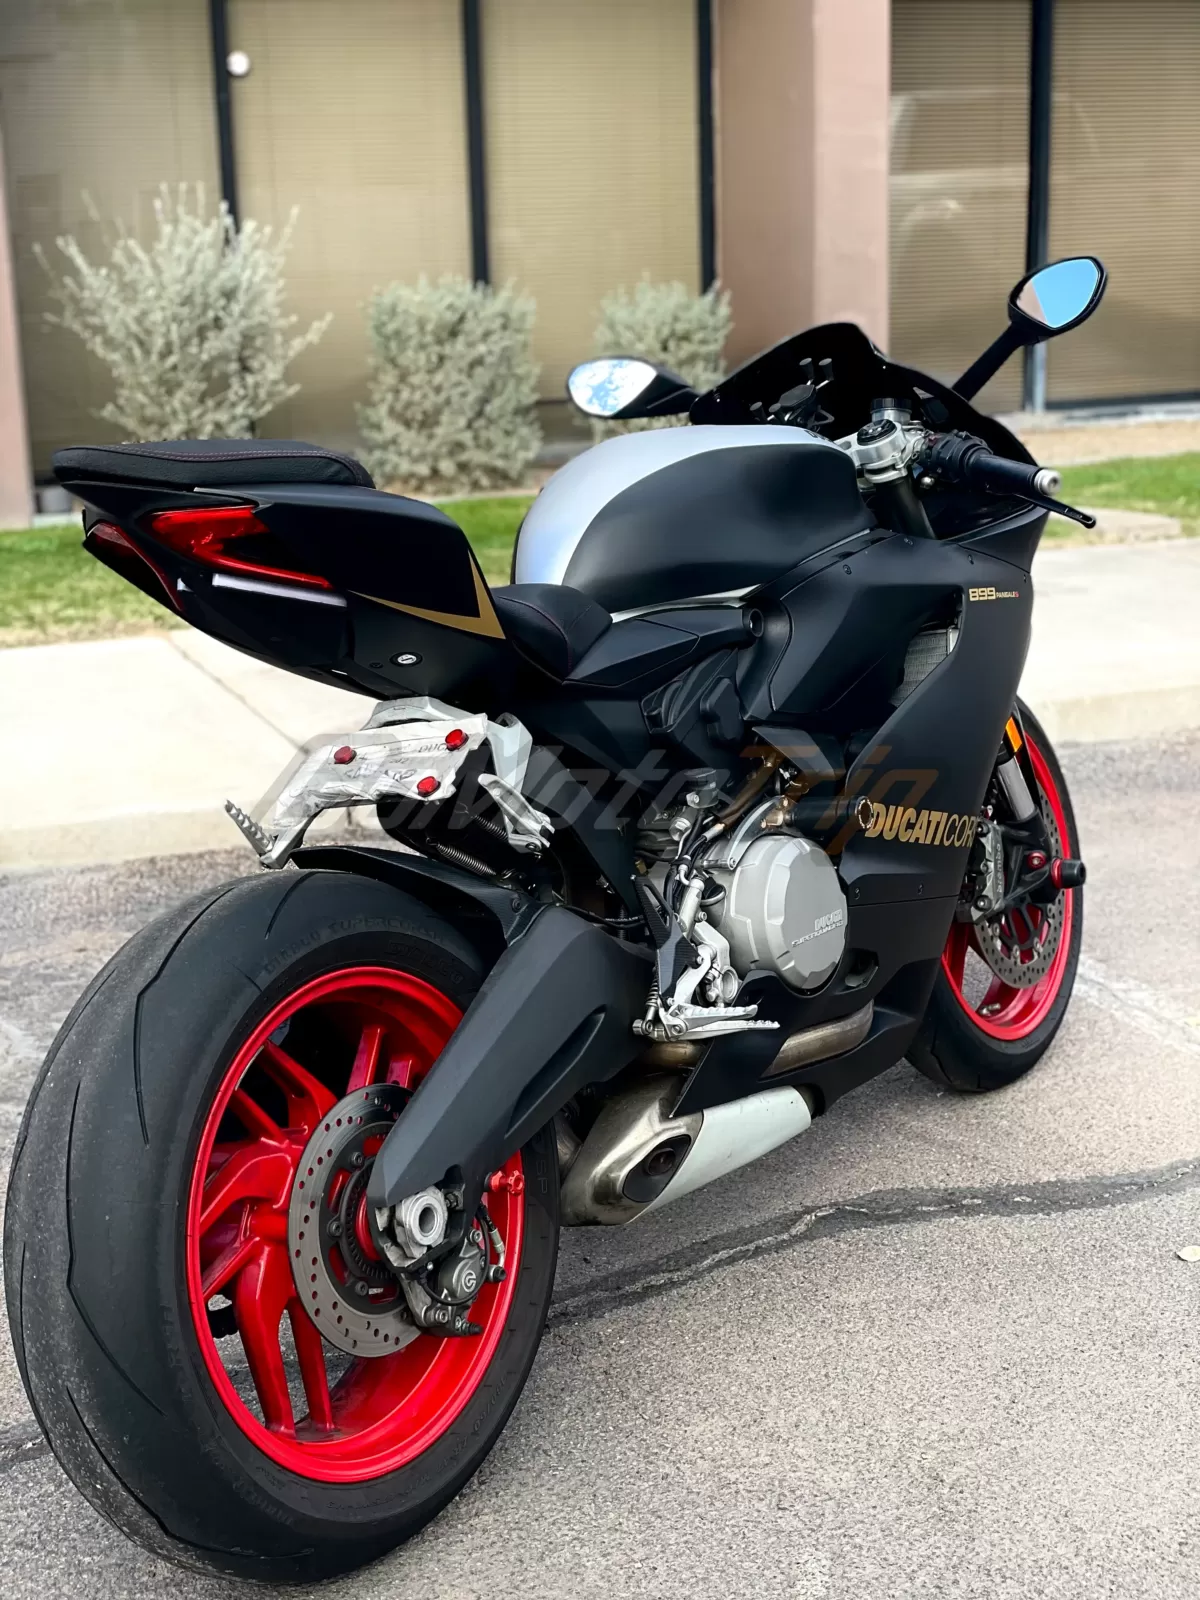 Rider-Review-131499-Bradley-Ducati-899-PANIGALE-S-Black-Fairing-3